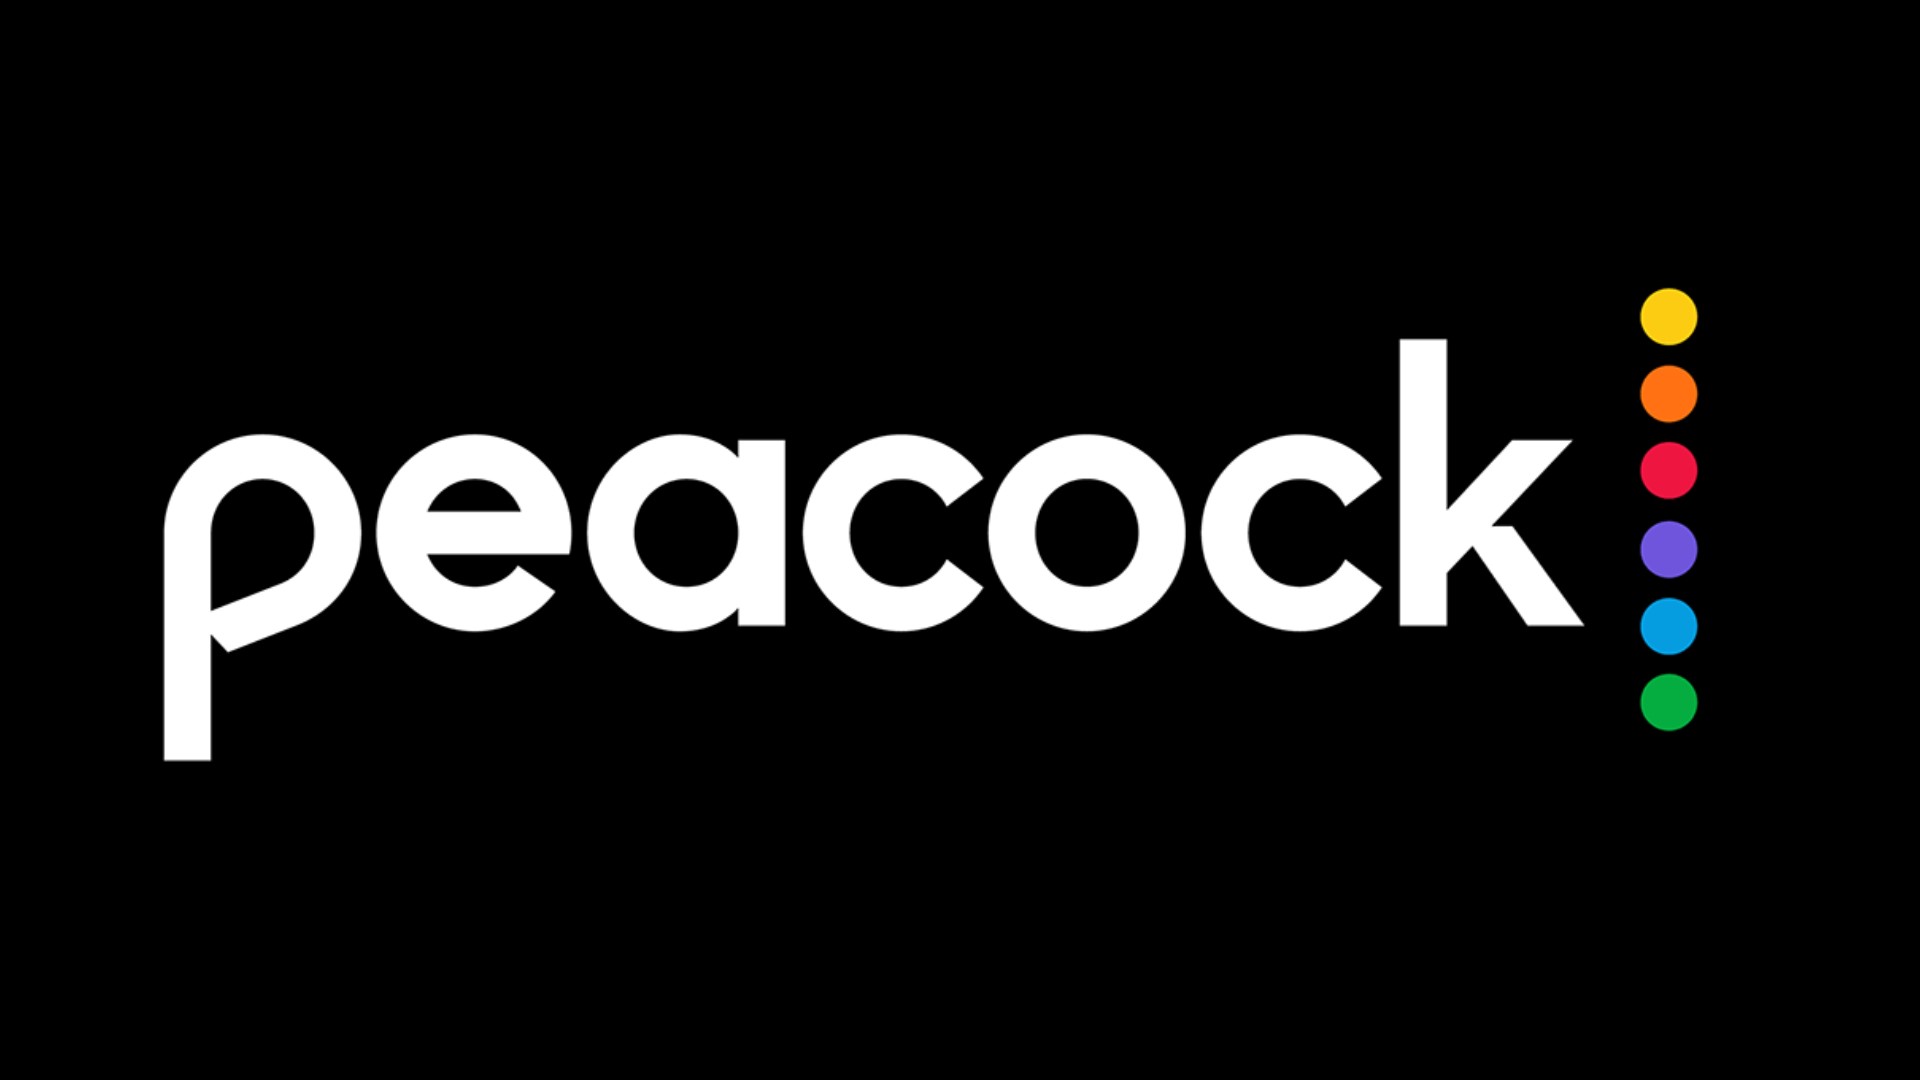 Big peacock logo